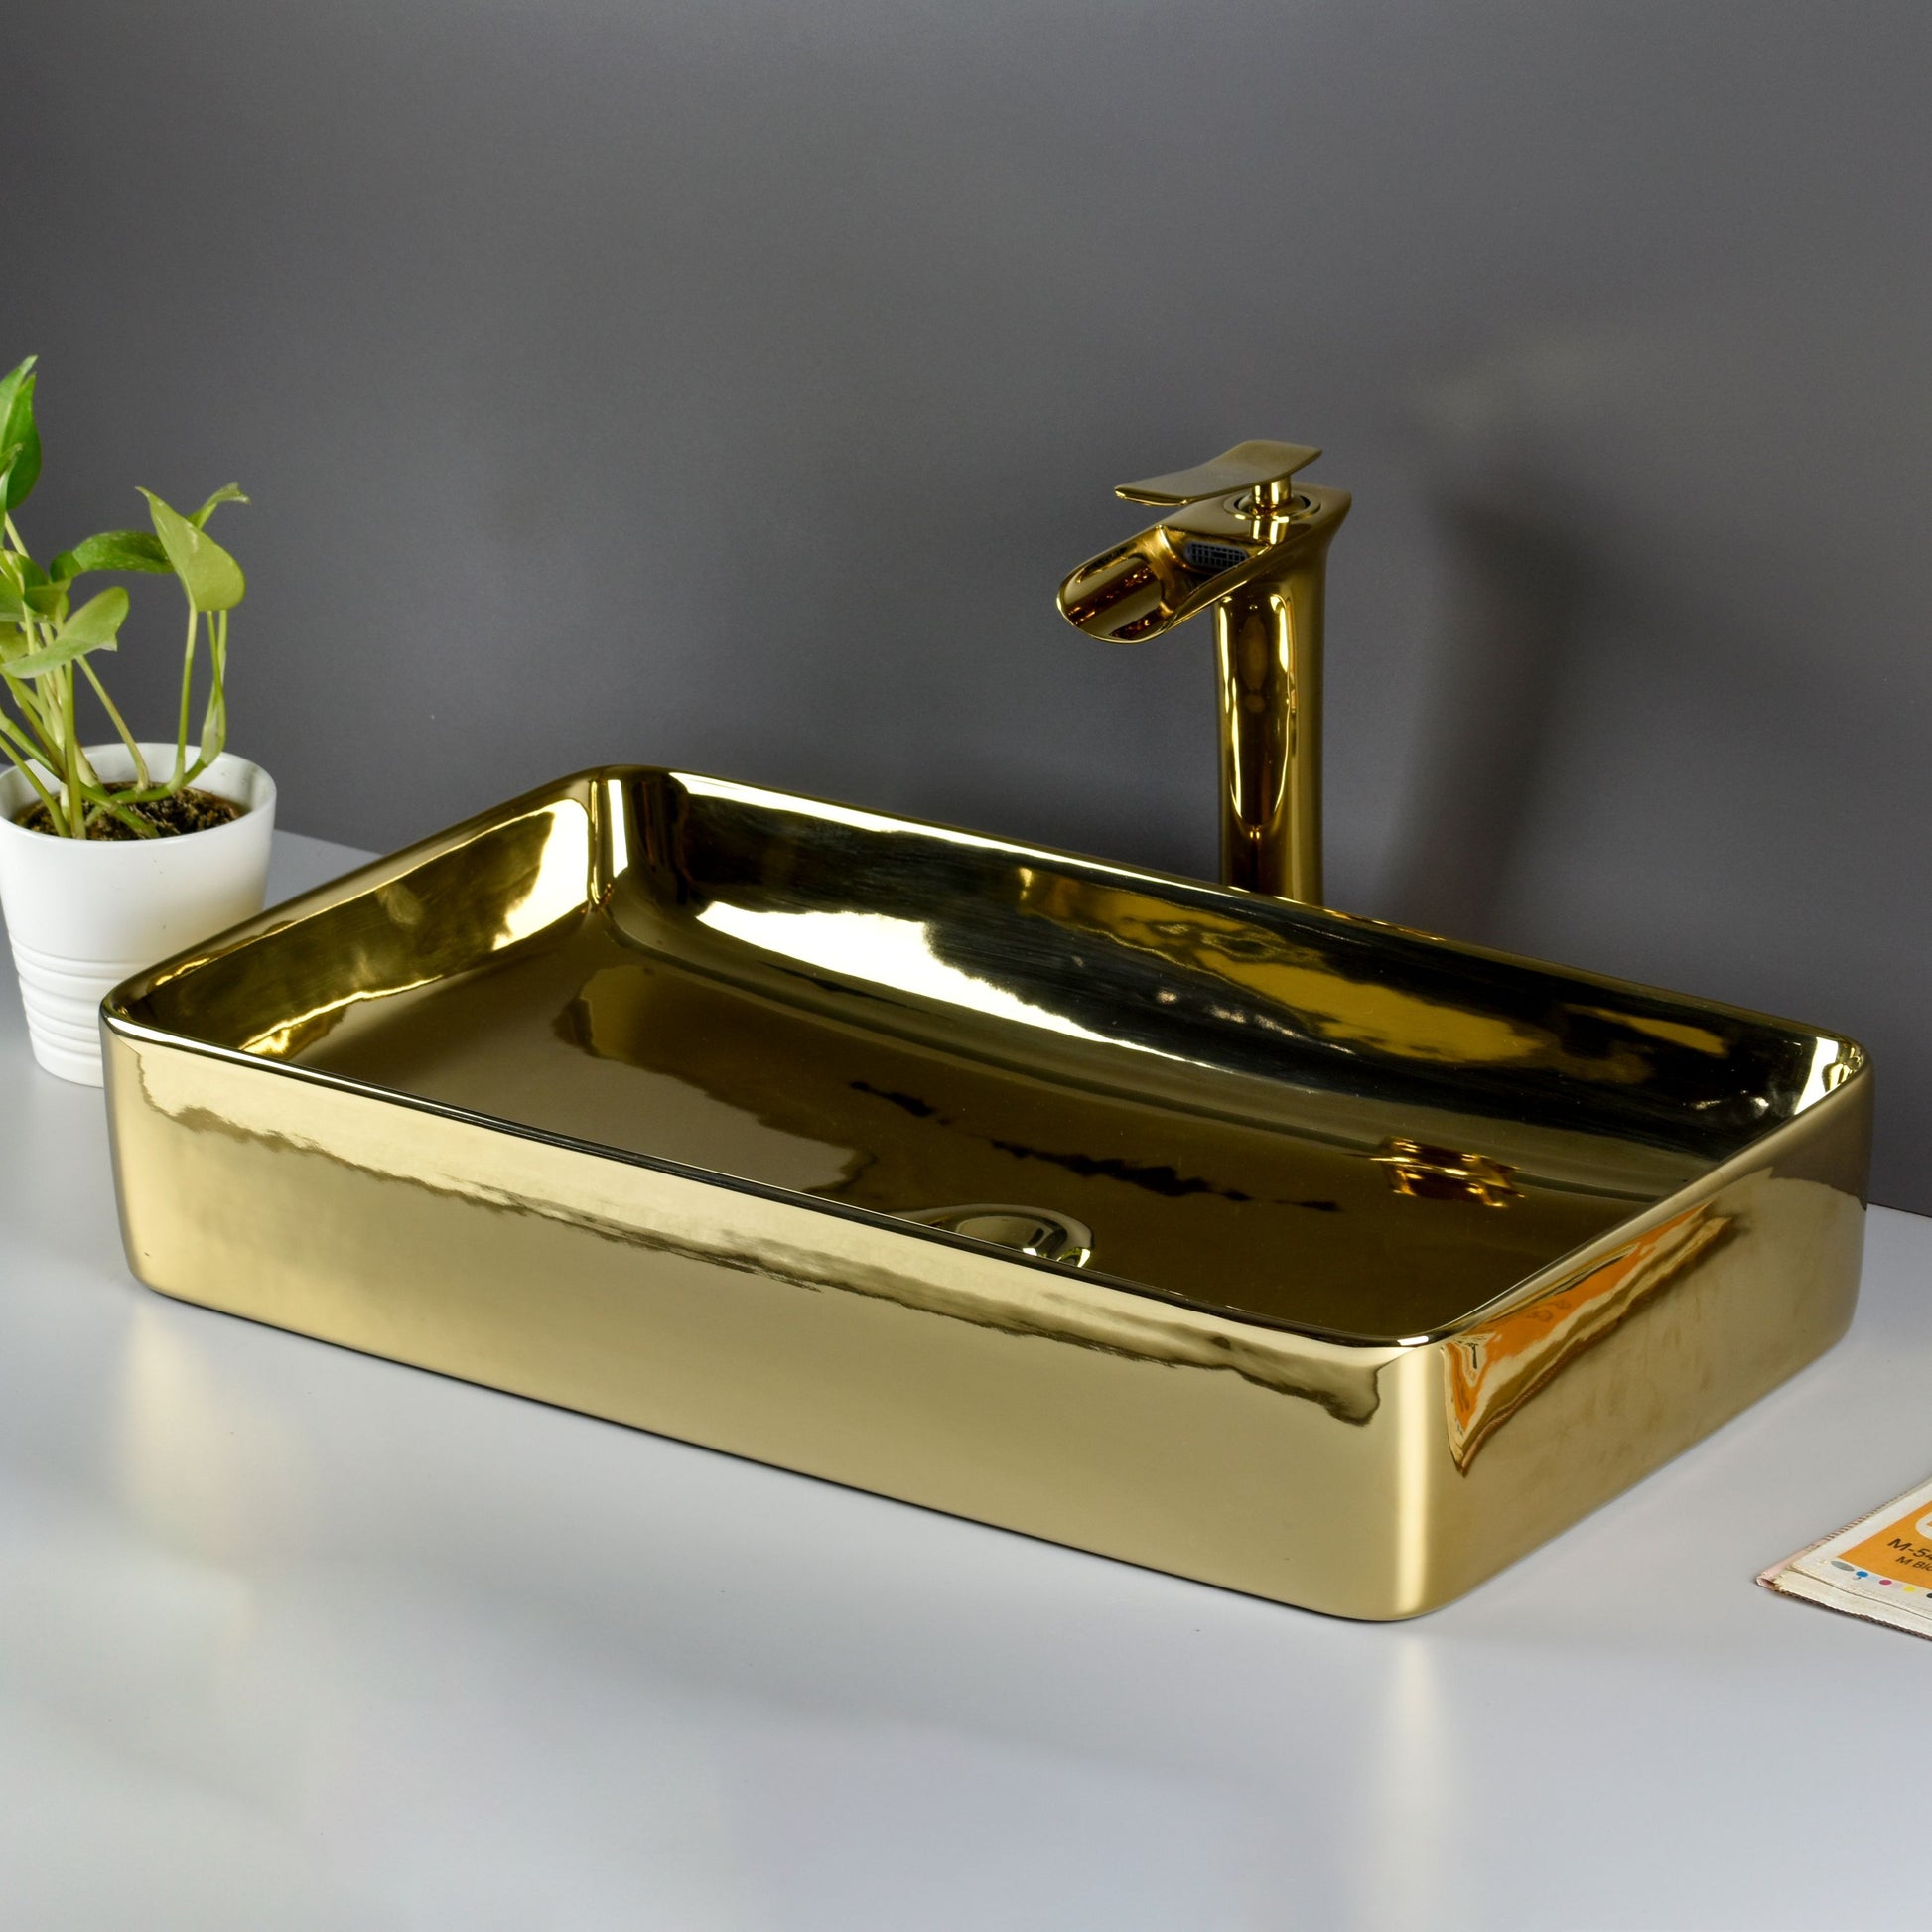 InArt Wash Basin Designer Counter Top Bathroom Sink - Vanity Wash Basin for Bathroom, Table Top Wash Basin 62 x 35 x 12 cm Gold DW273 - InArt-Studio